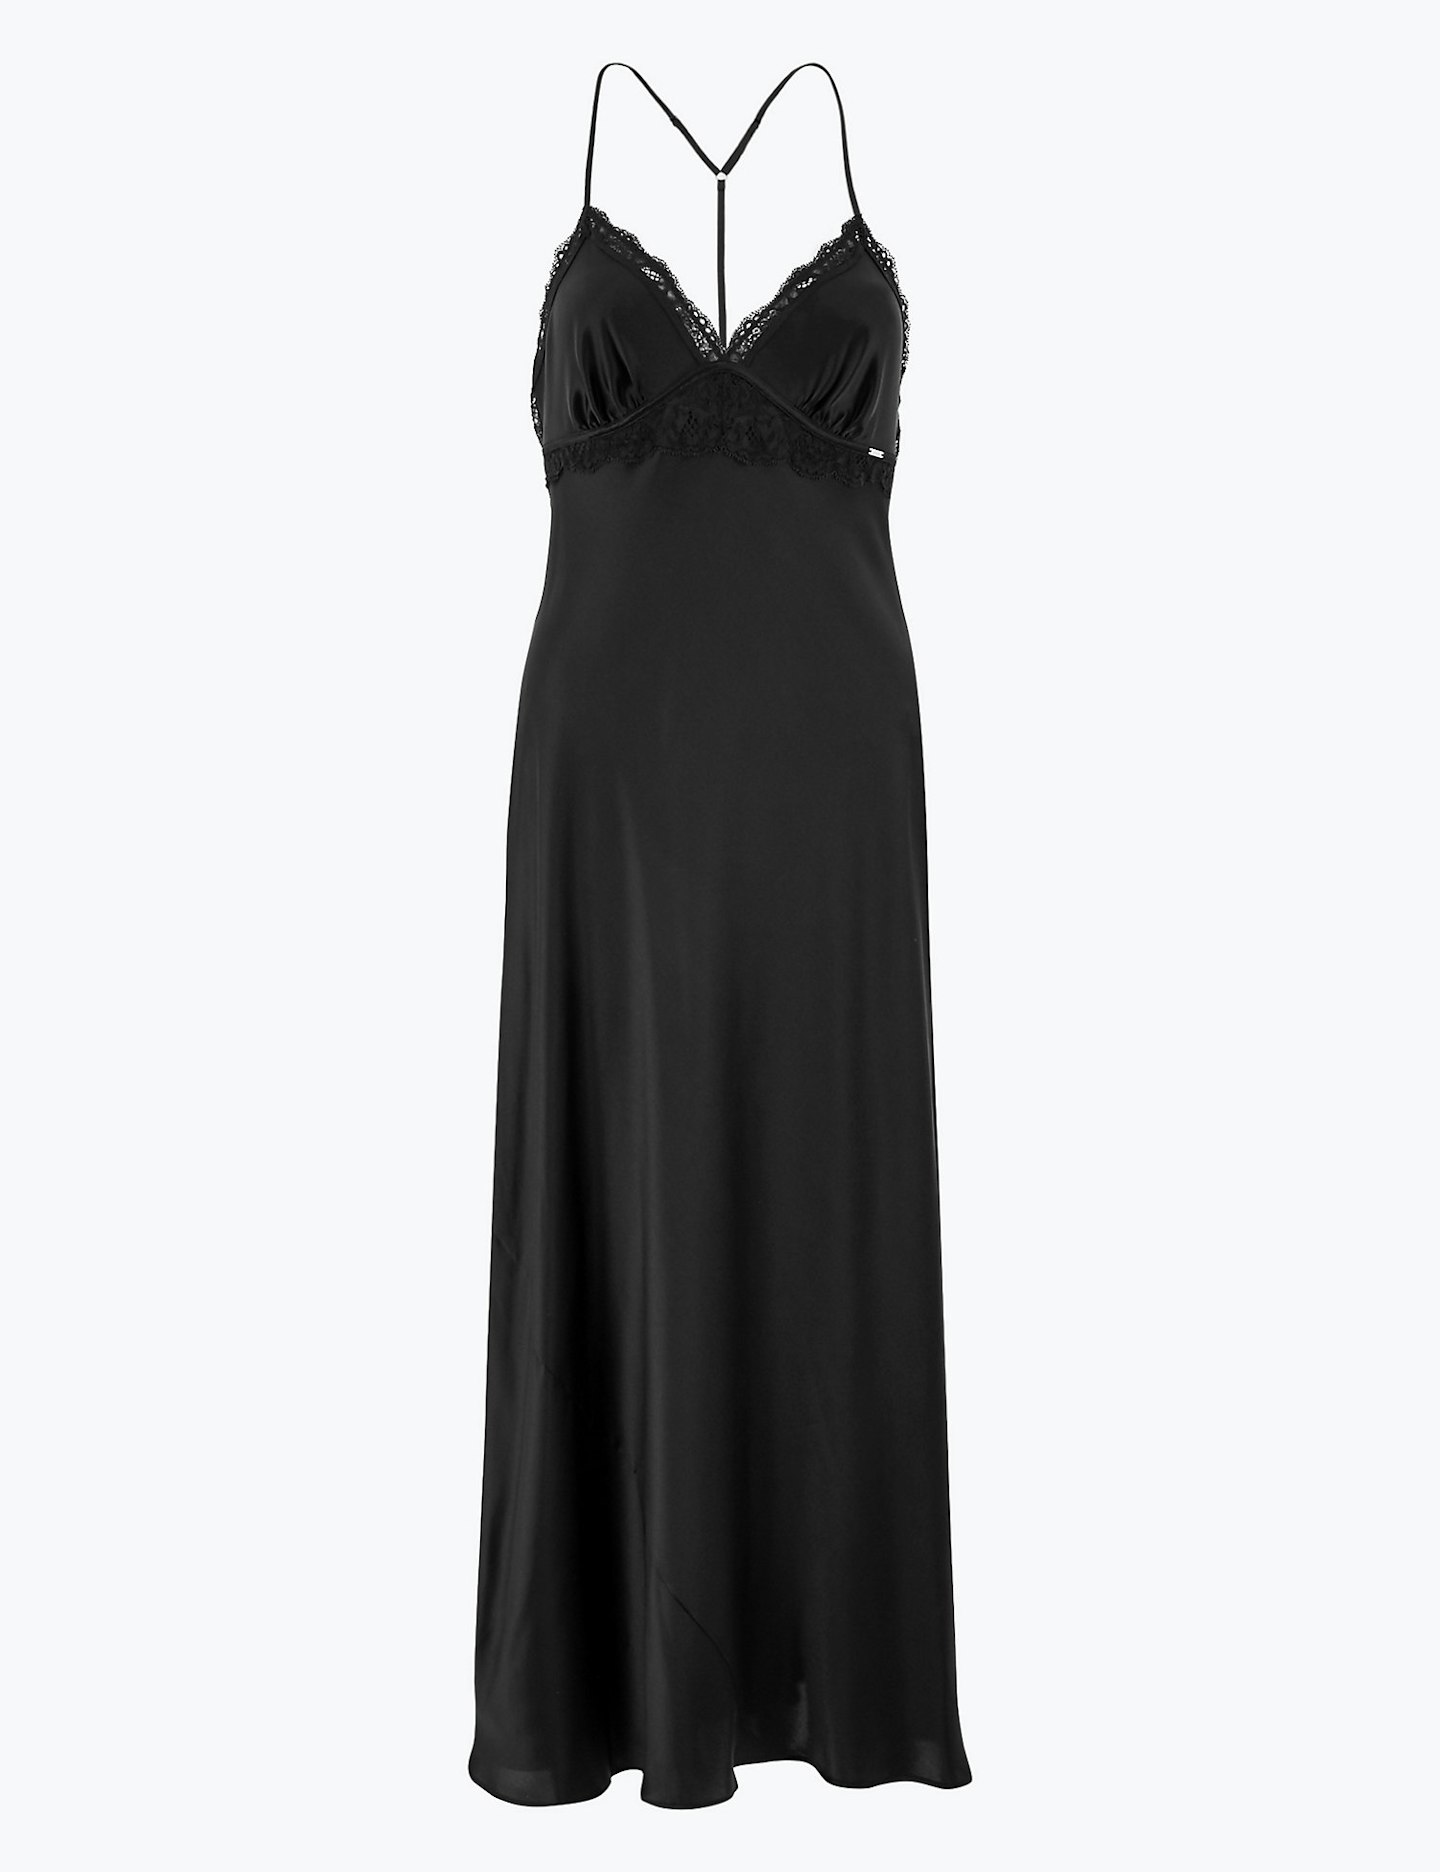 Rosie for M&S, Nightdress, £90